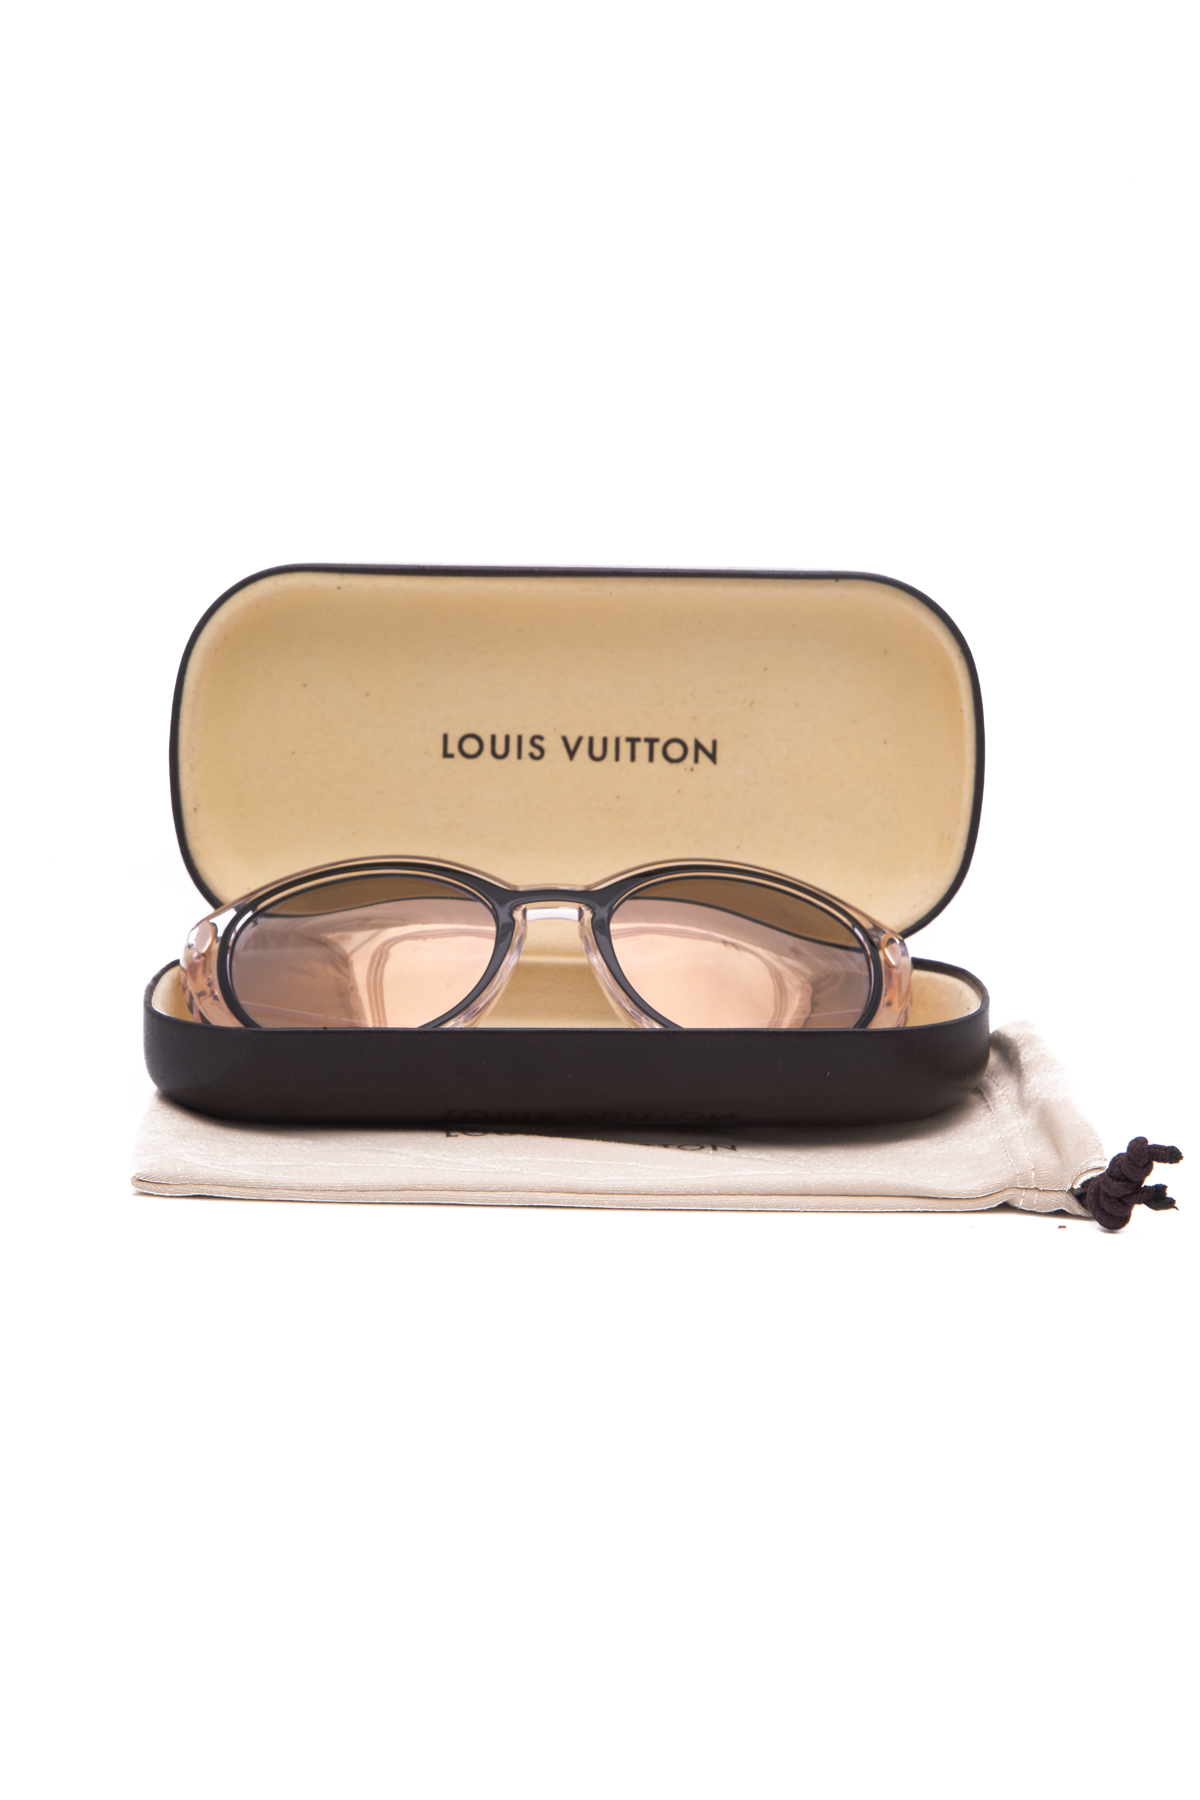 Louis Vuitton LV ESCALE GREASE SUNGLASSES  Sunglasses, Louis vuitton pink,  Dior ring